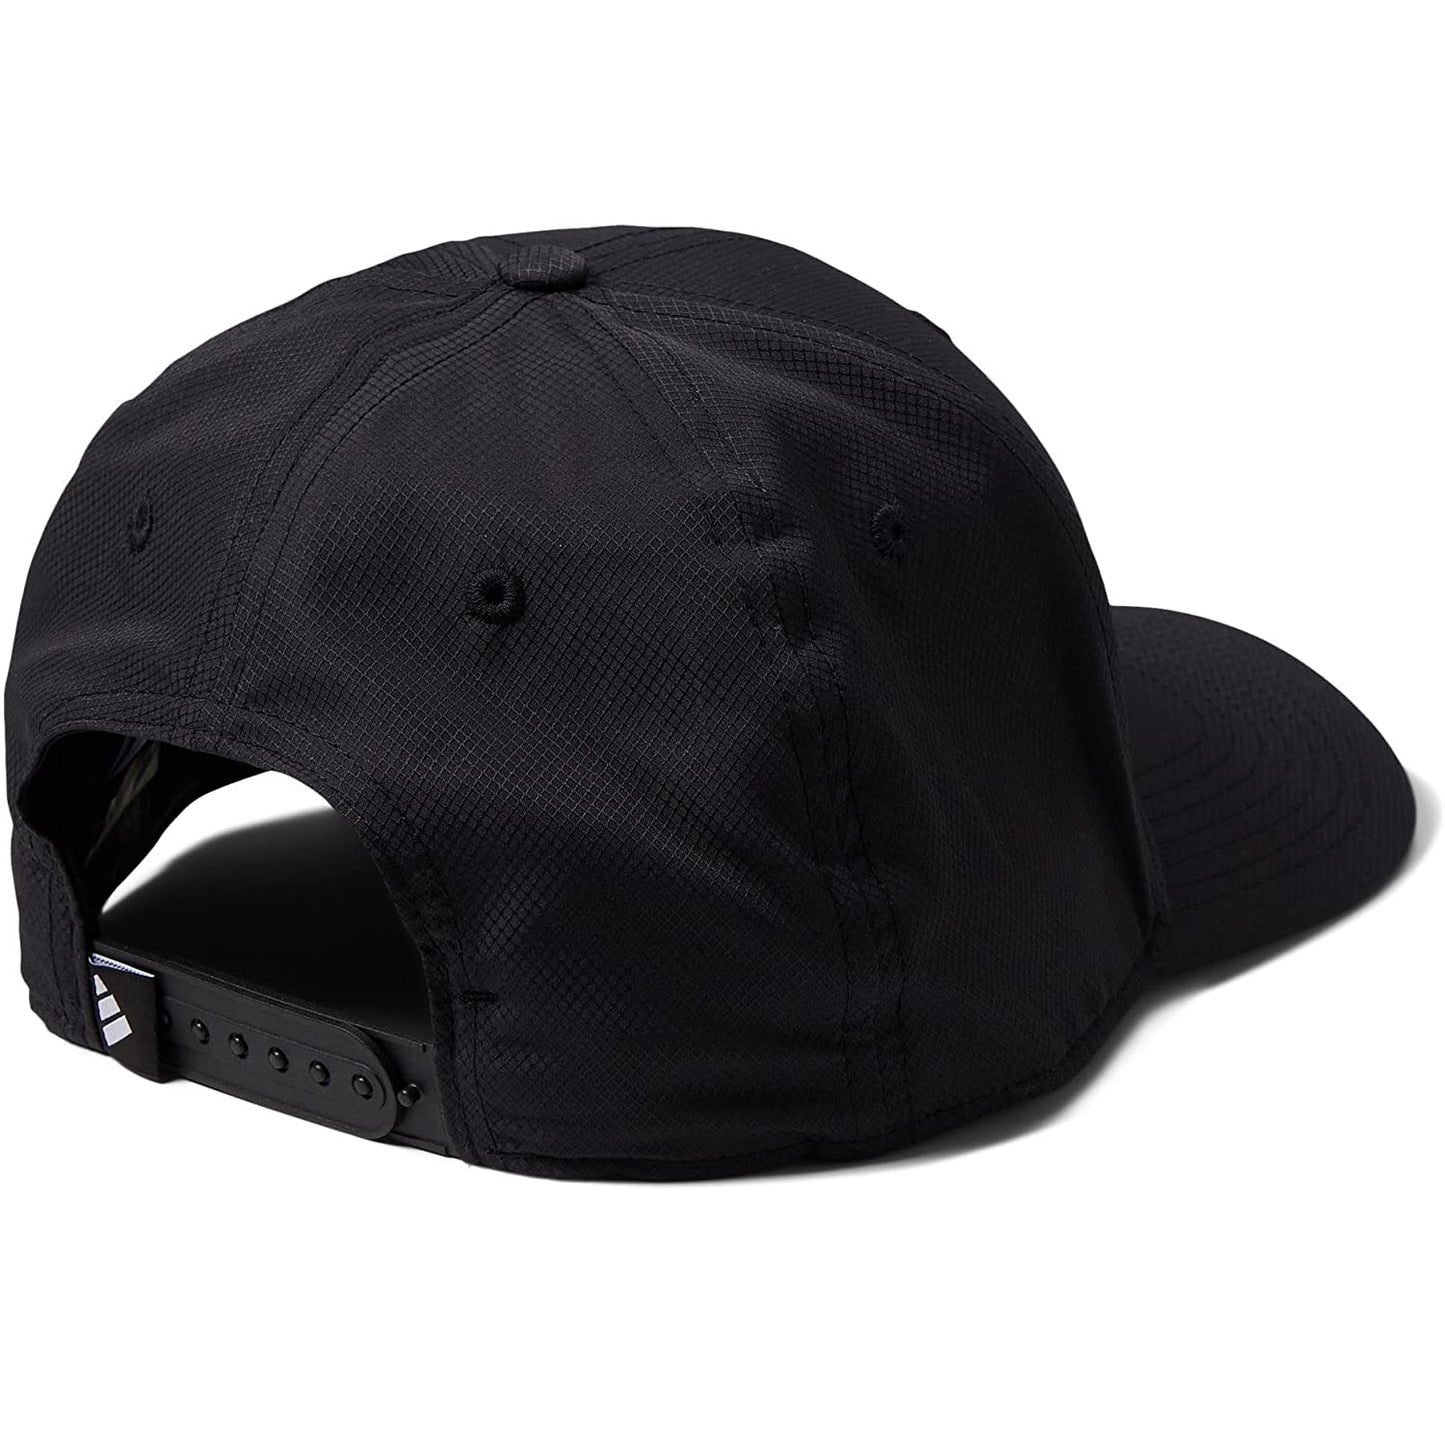 Adidas Men's Tour Snapback Golf Hat